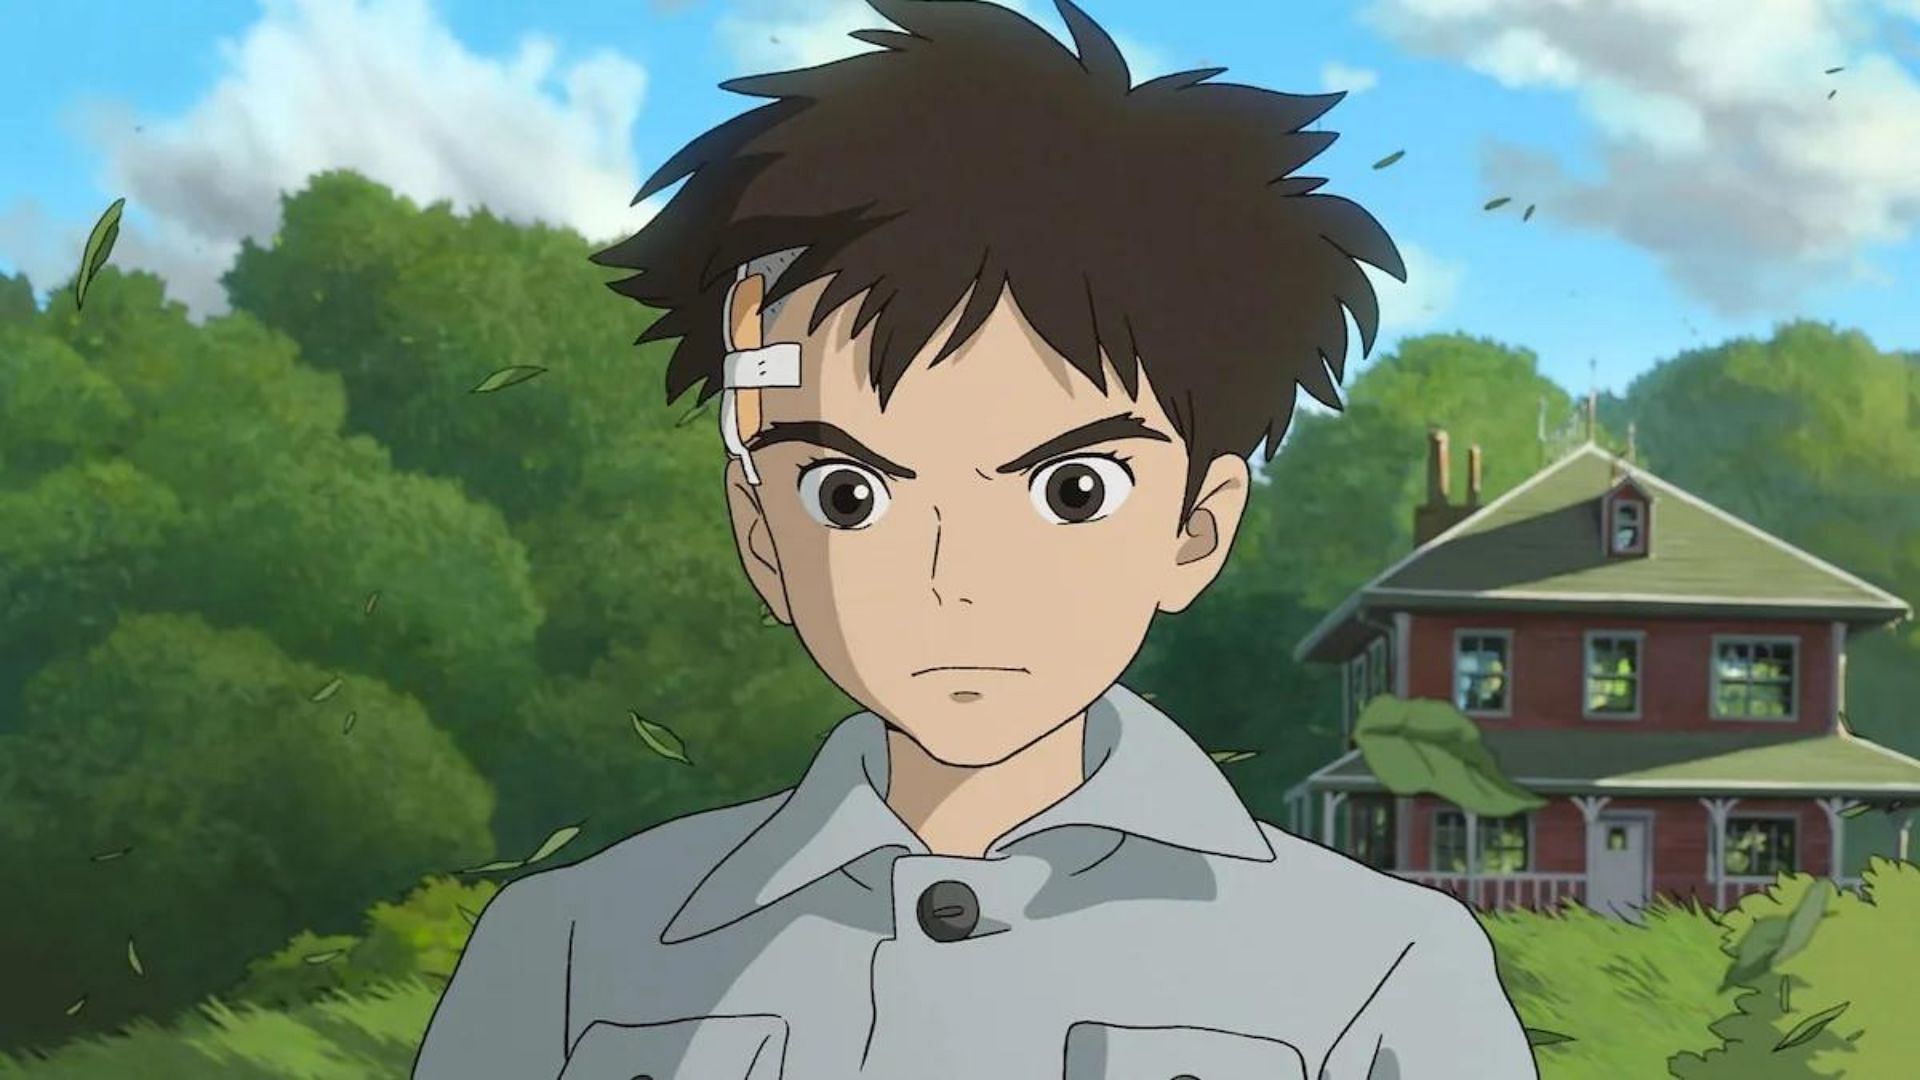 Mahito Maki as seen in The Boy and the Heron movie (Image via Studio Ghibli)